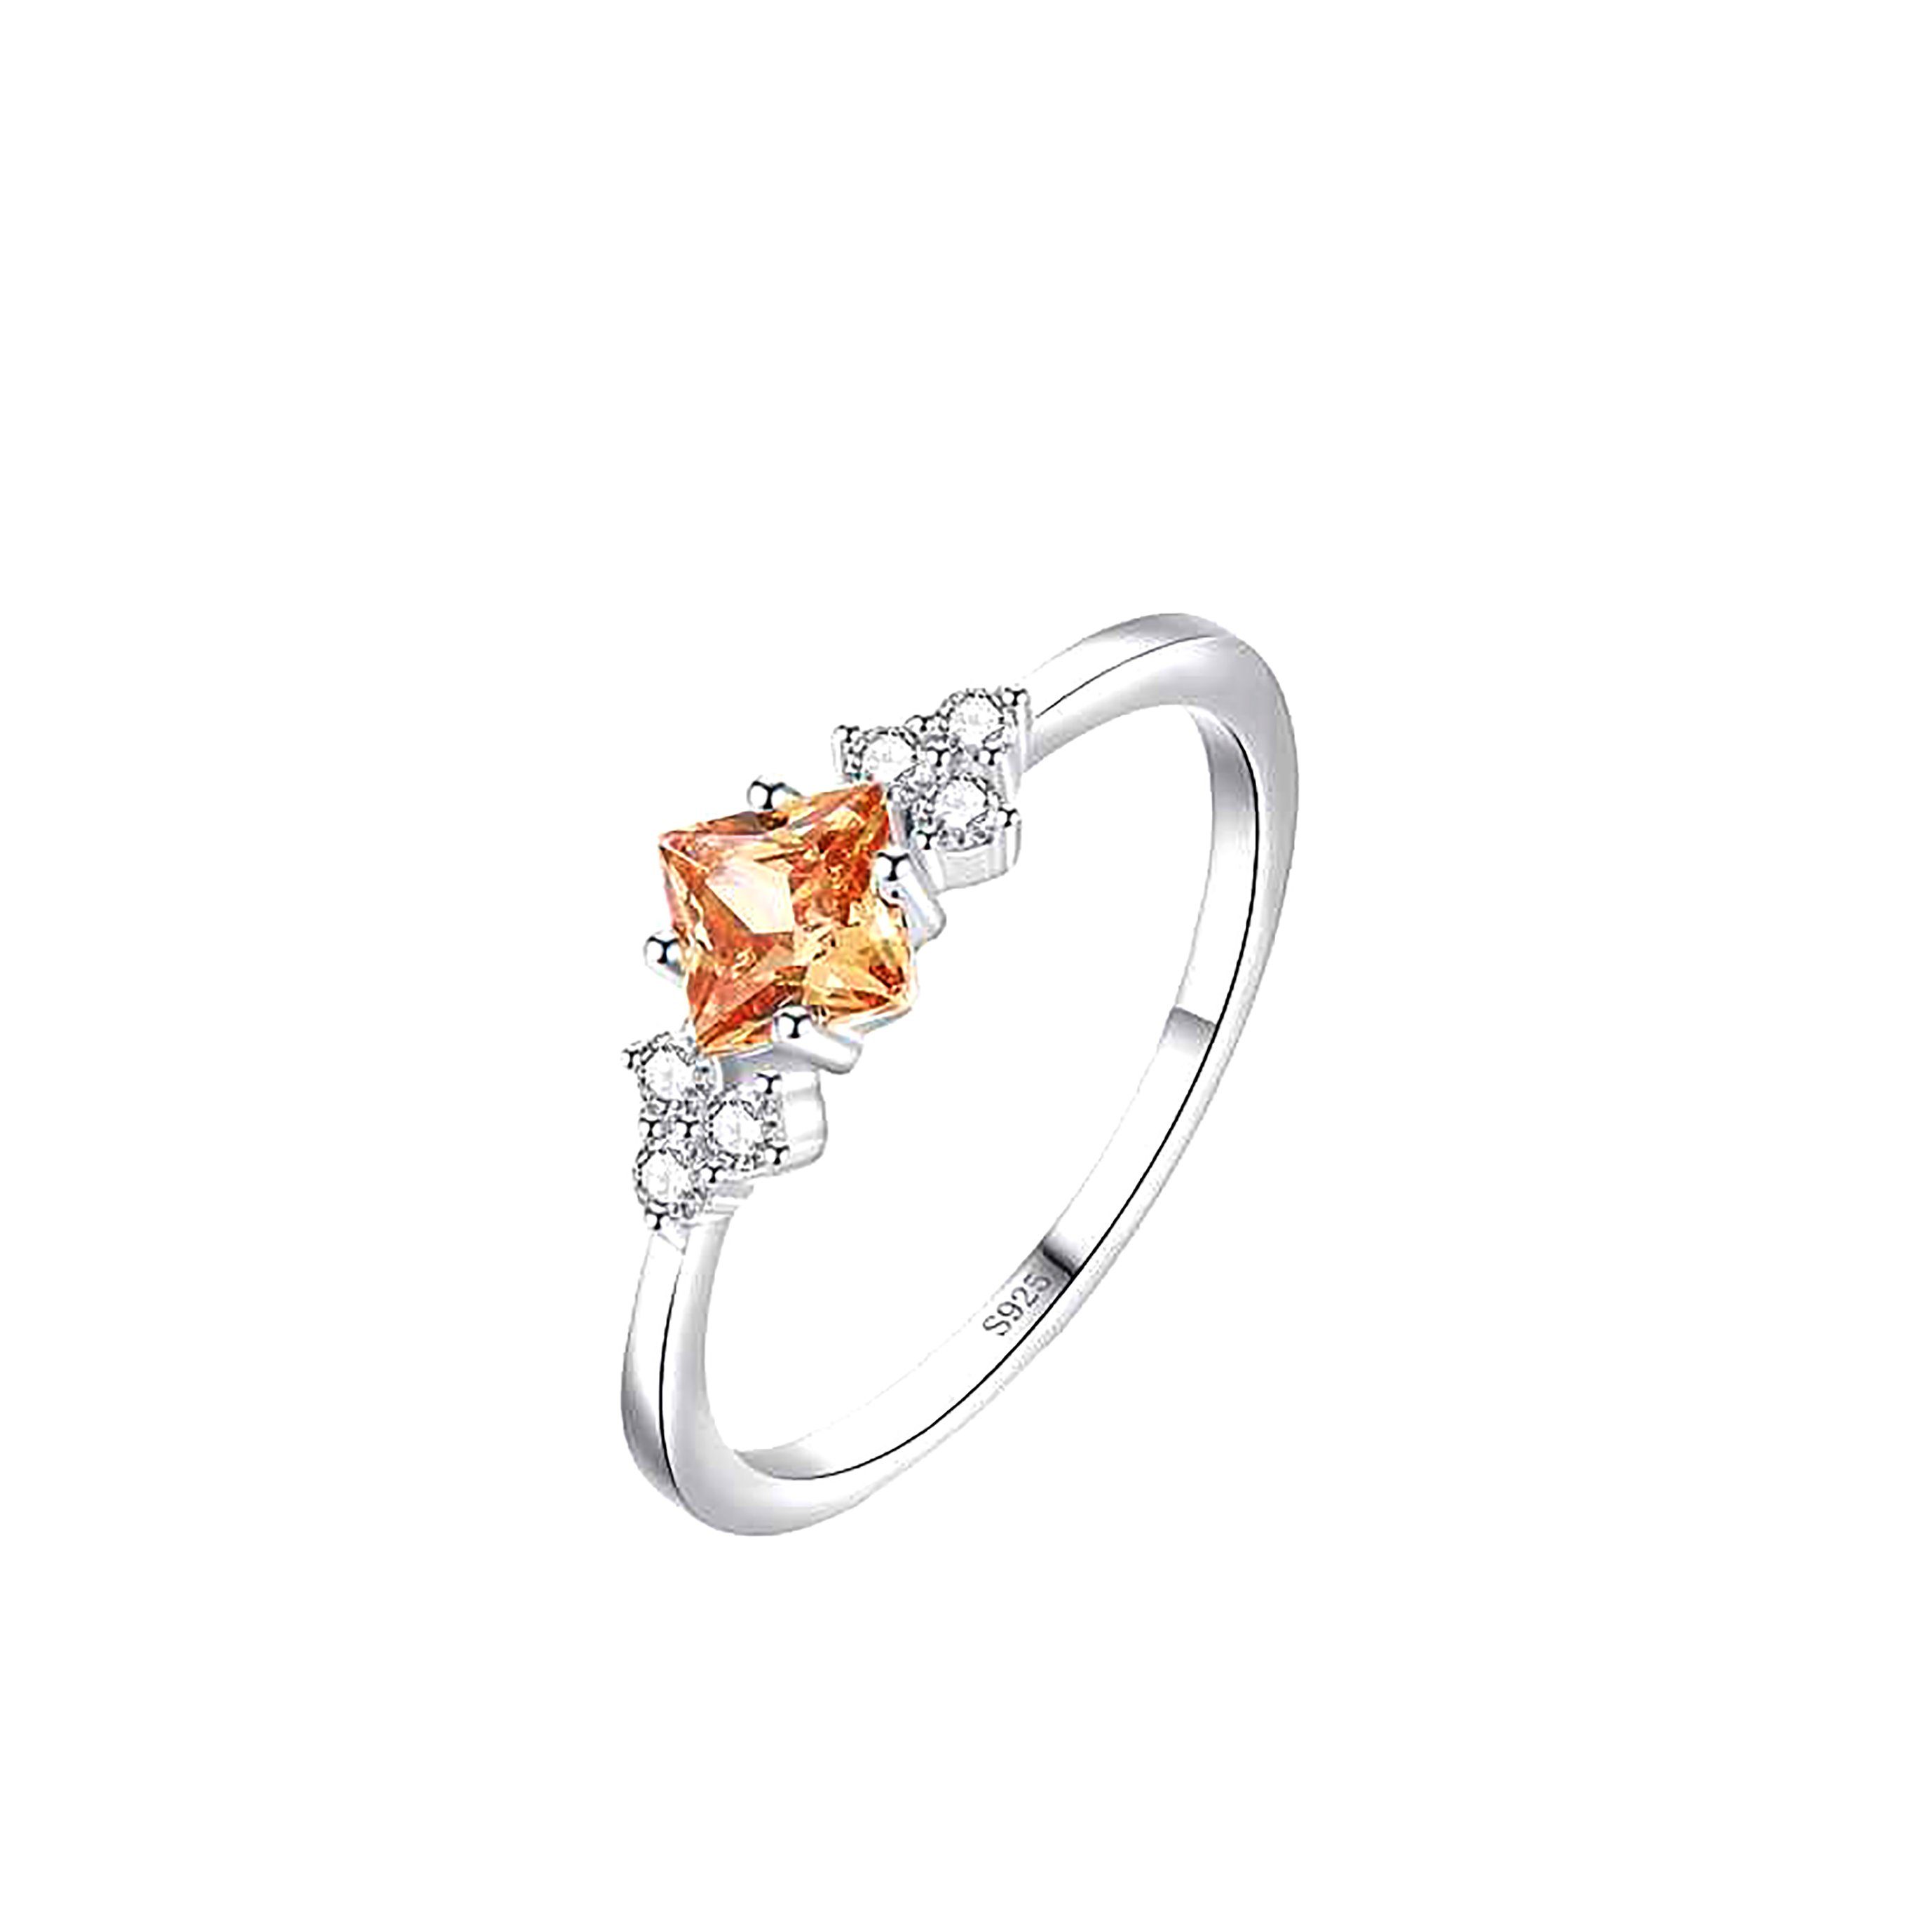 Super Kreativer Sparkle Fingerring Silber Ping Zirkonia für Frauen Tapferer Ring